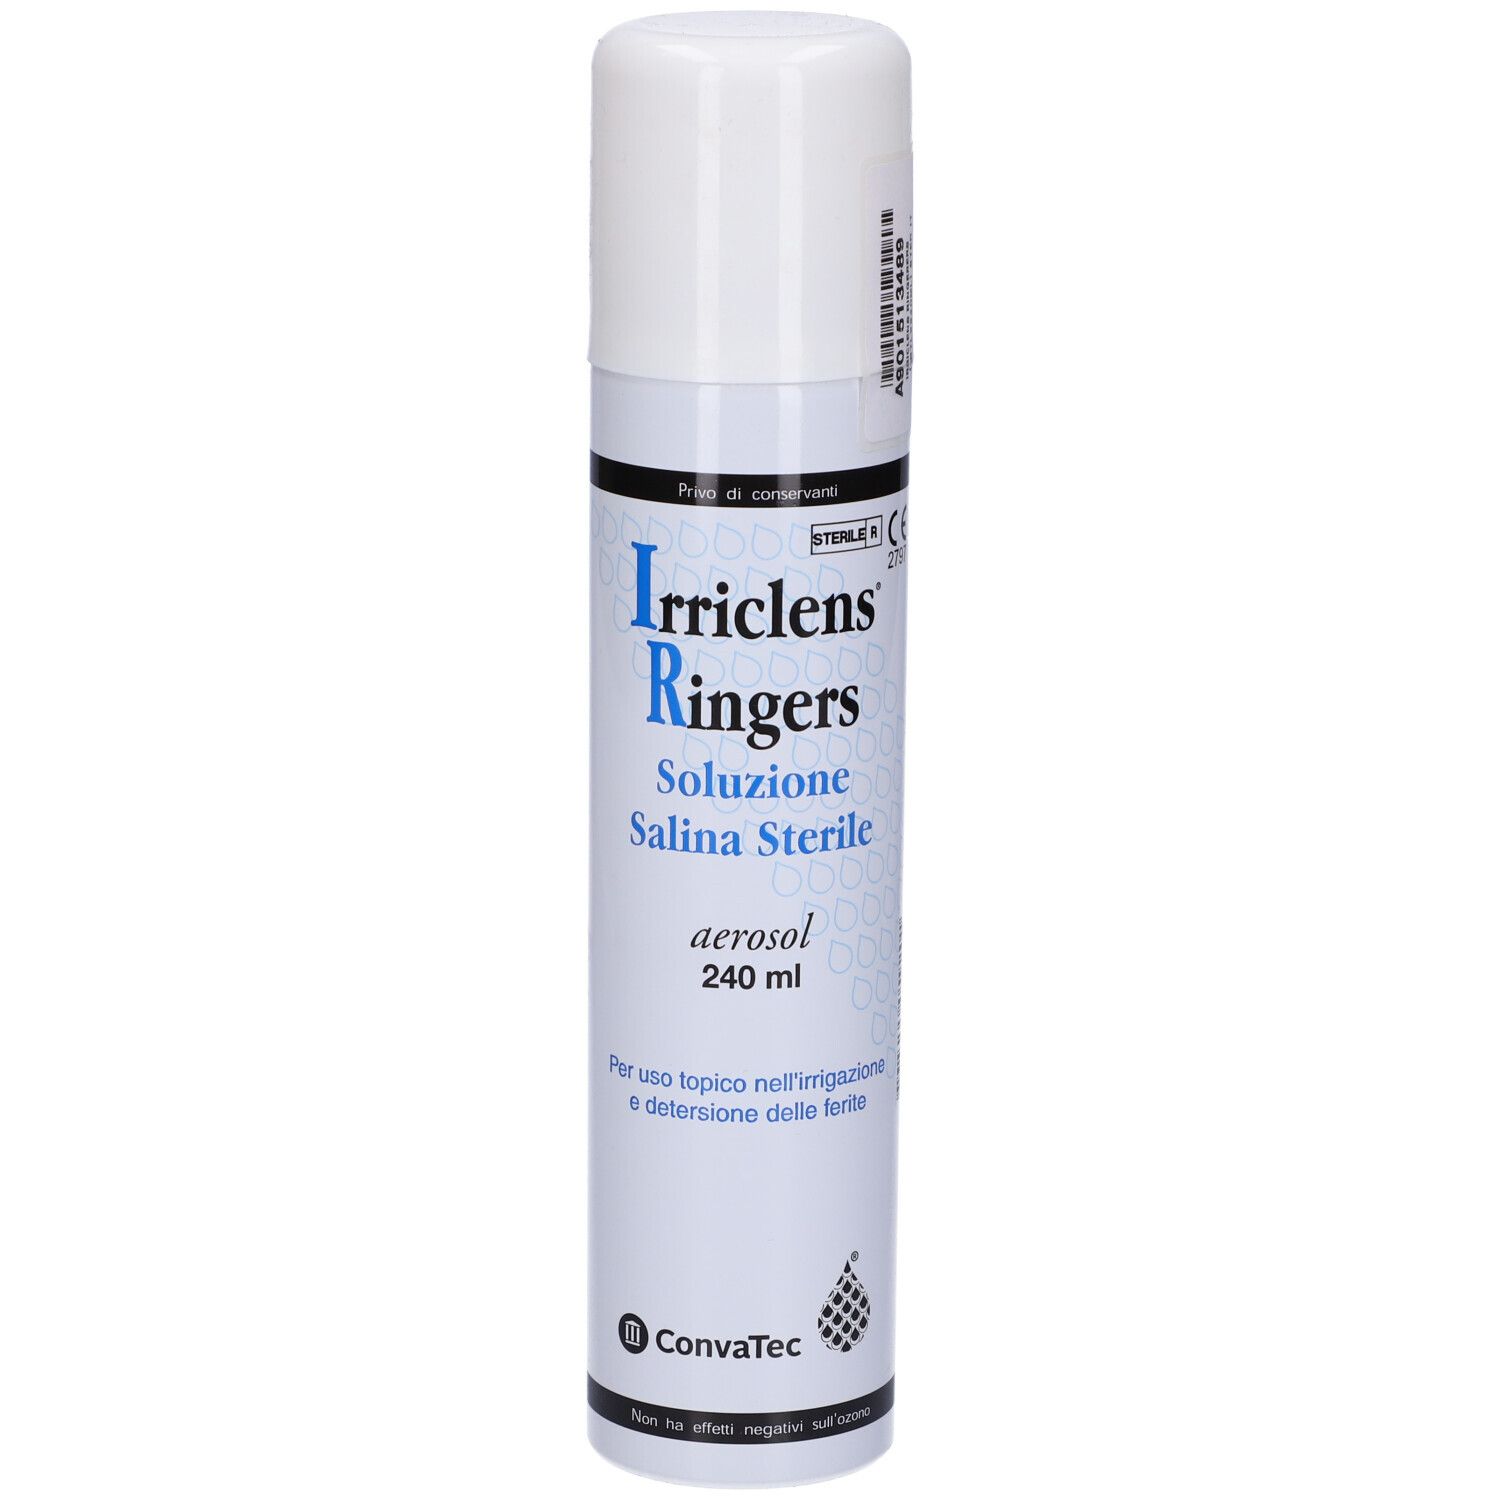 Irriclens® Ringers Soluzione Salina Sterile